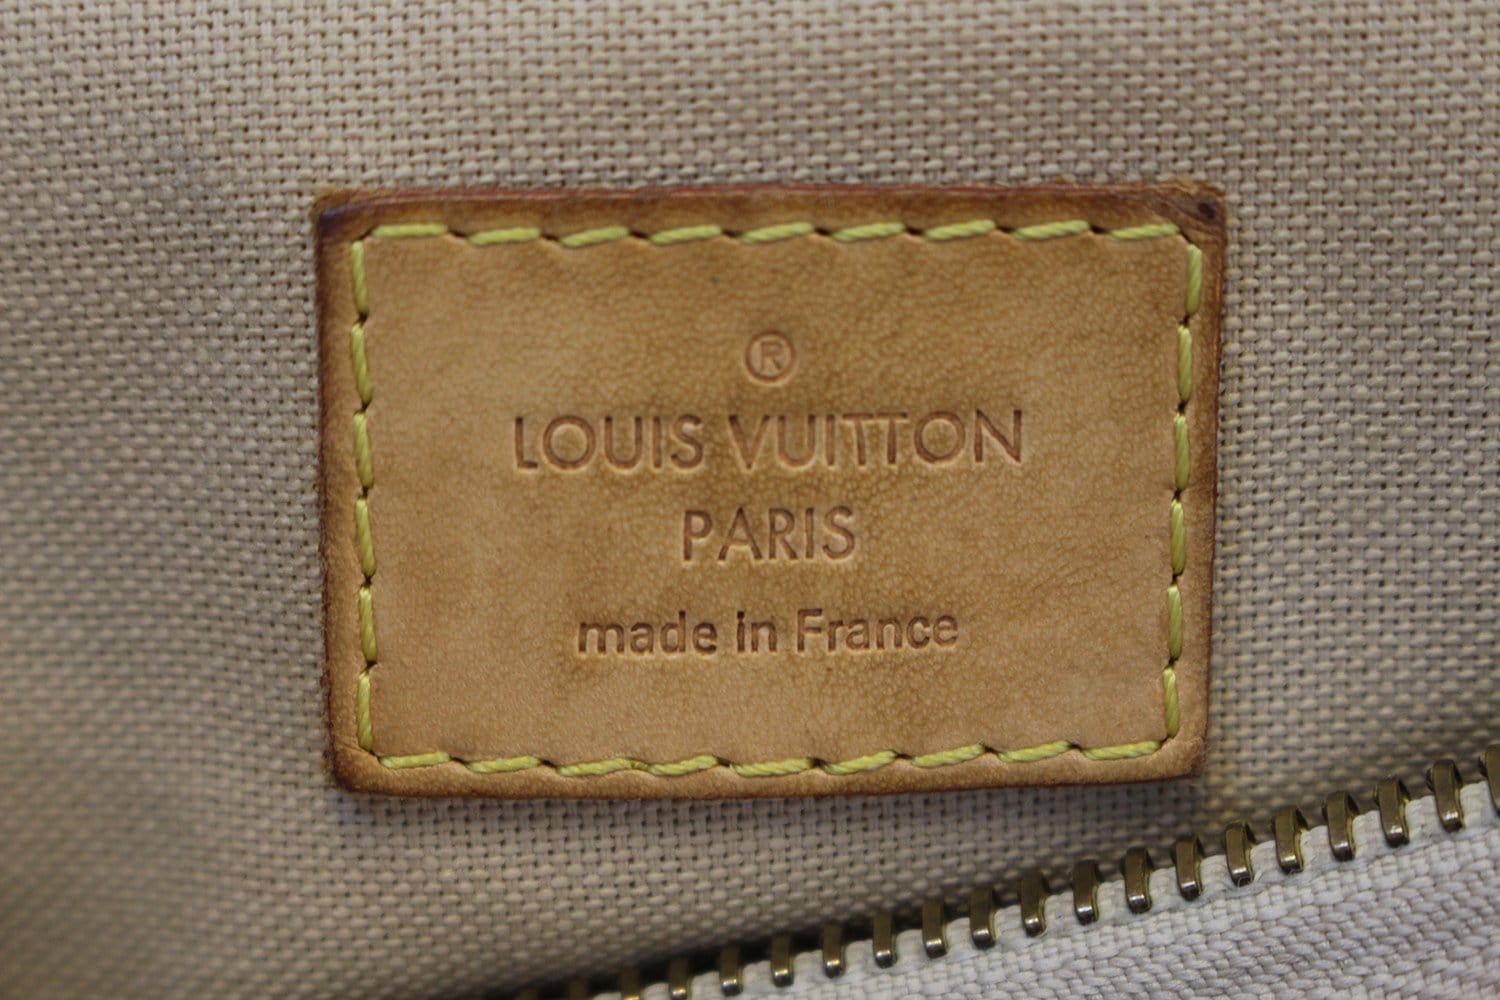 AUTHENTIC Louis Vuitton Siracusa Damier Azur PM PREOWNED – Jj's Closet, LLC